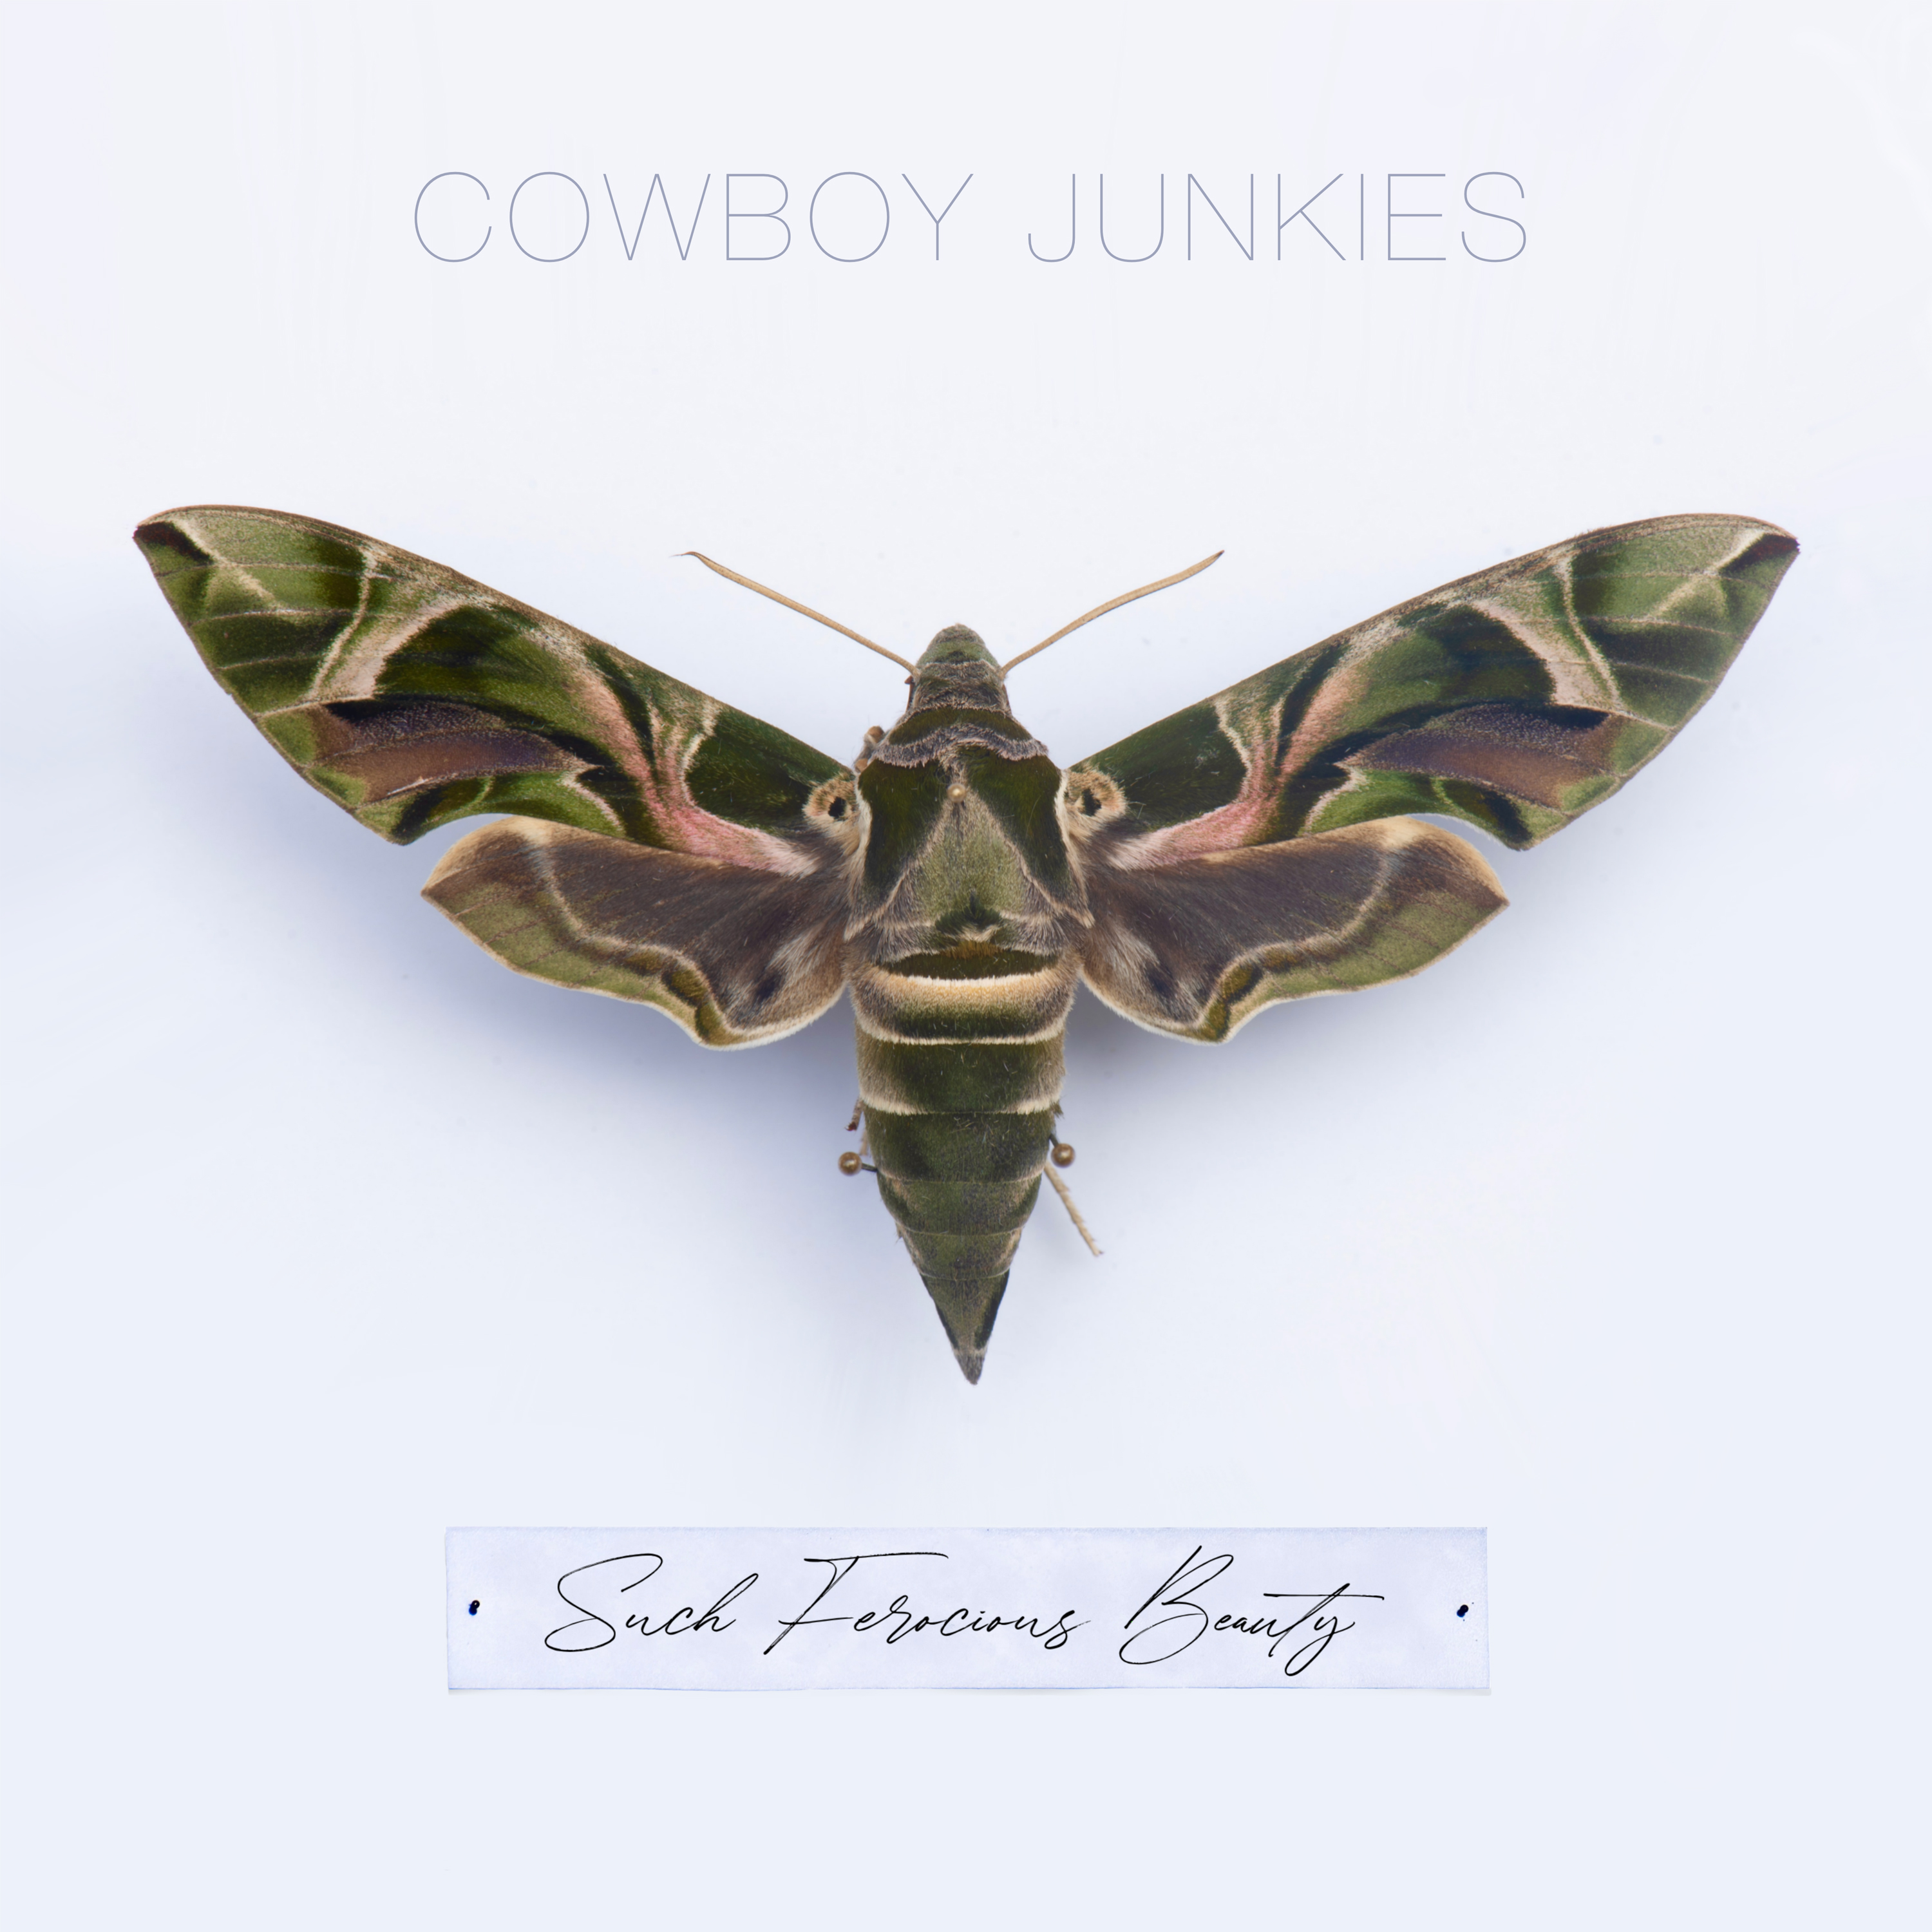 Cowboy Junkies - Such Ferocious Beauty - CD